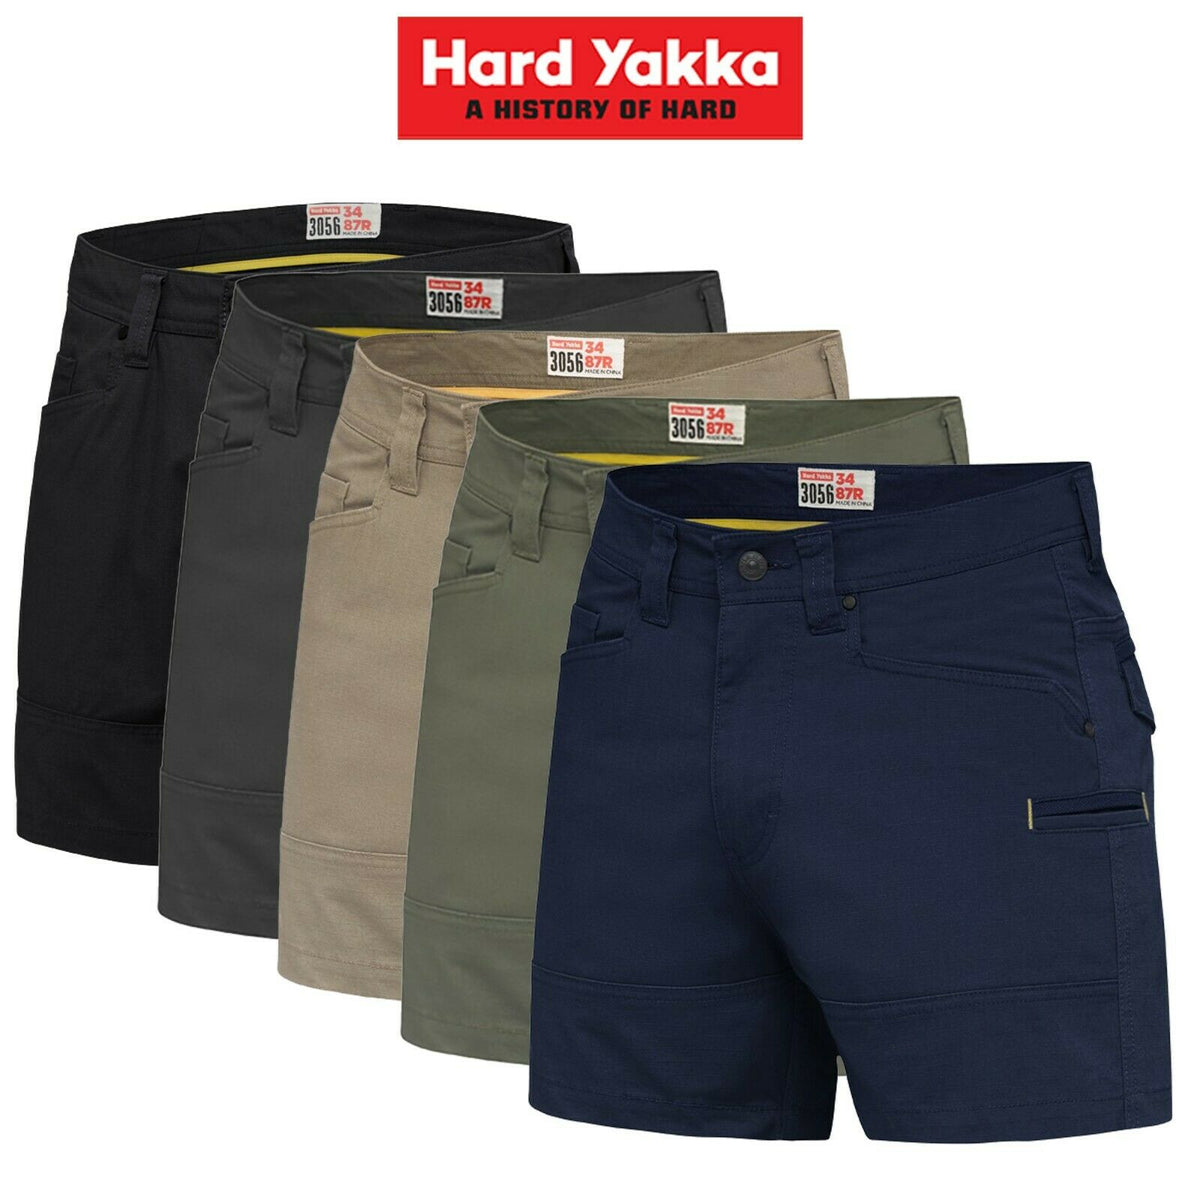 Hard Yakka 3056 Short Shorts Cotton Ripstop Tradie Utility Stretch Y05115